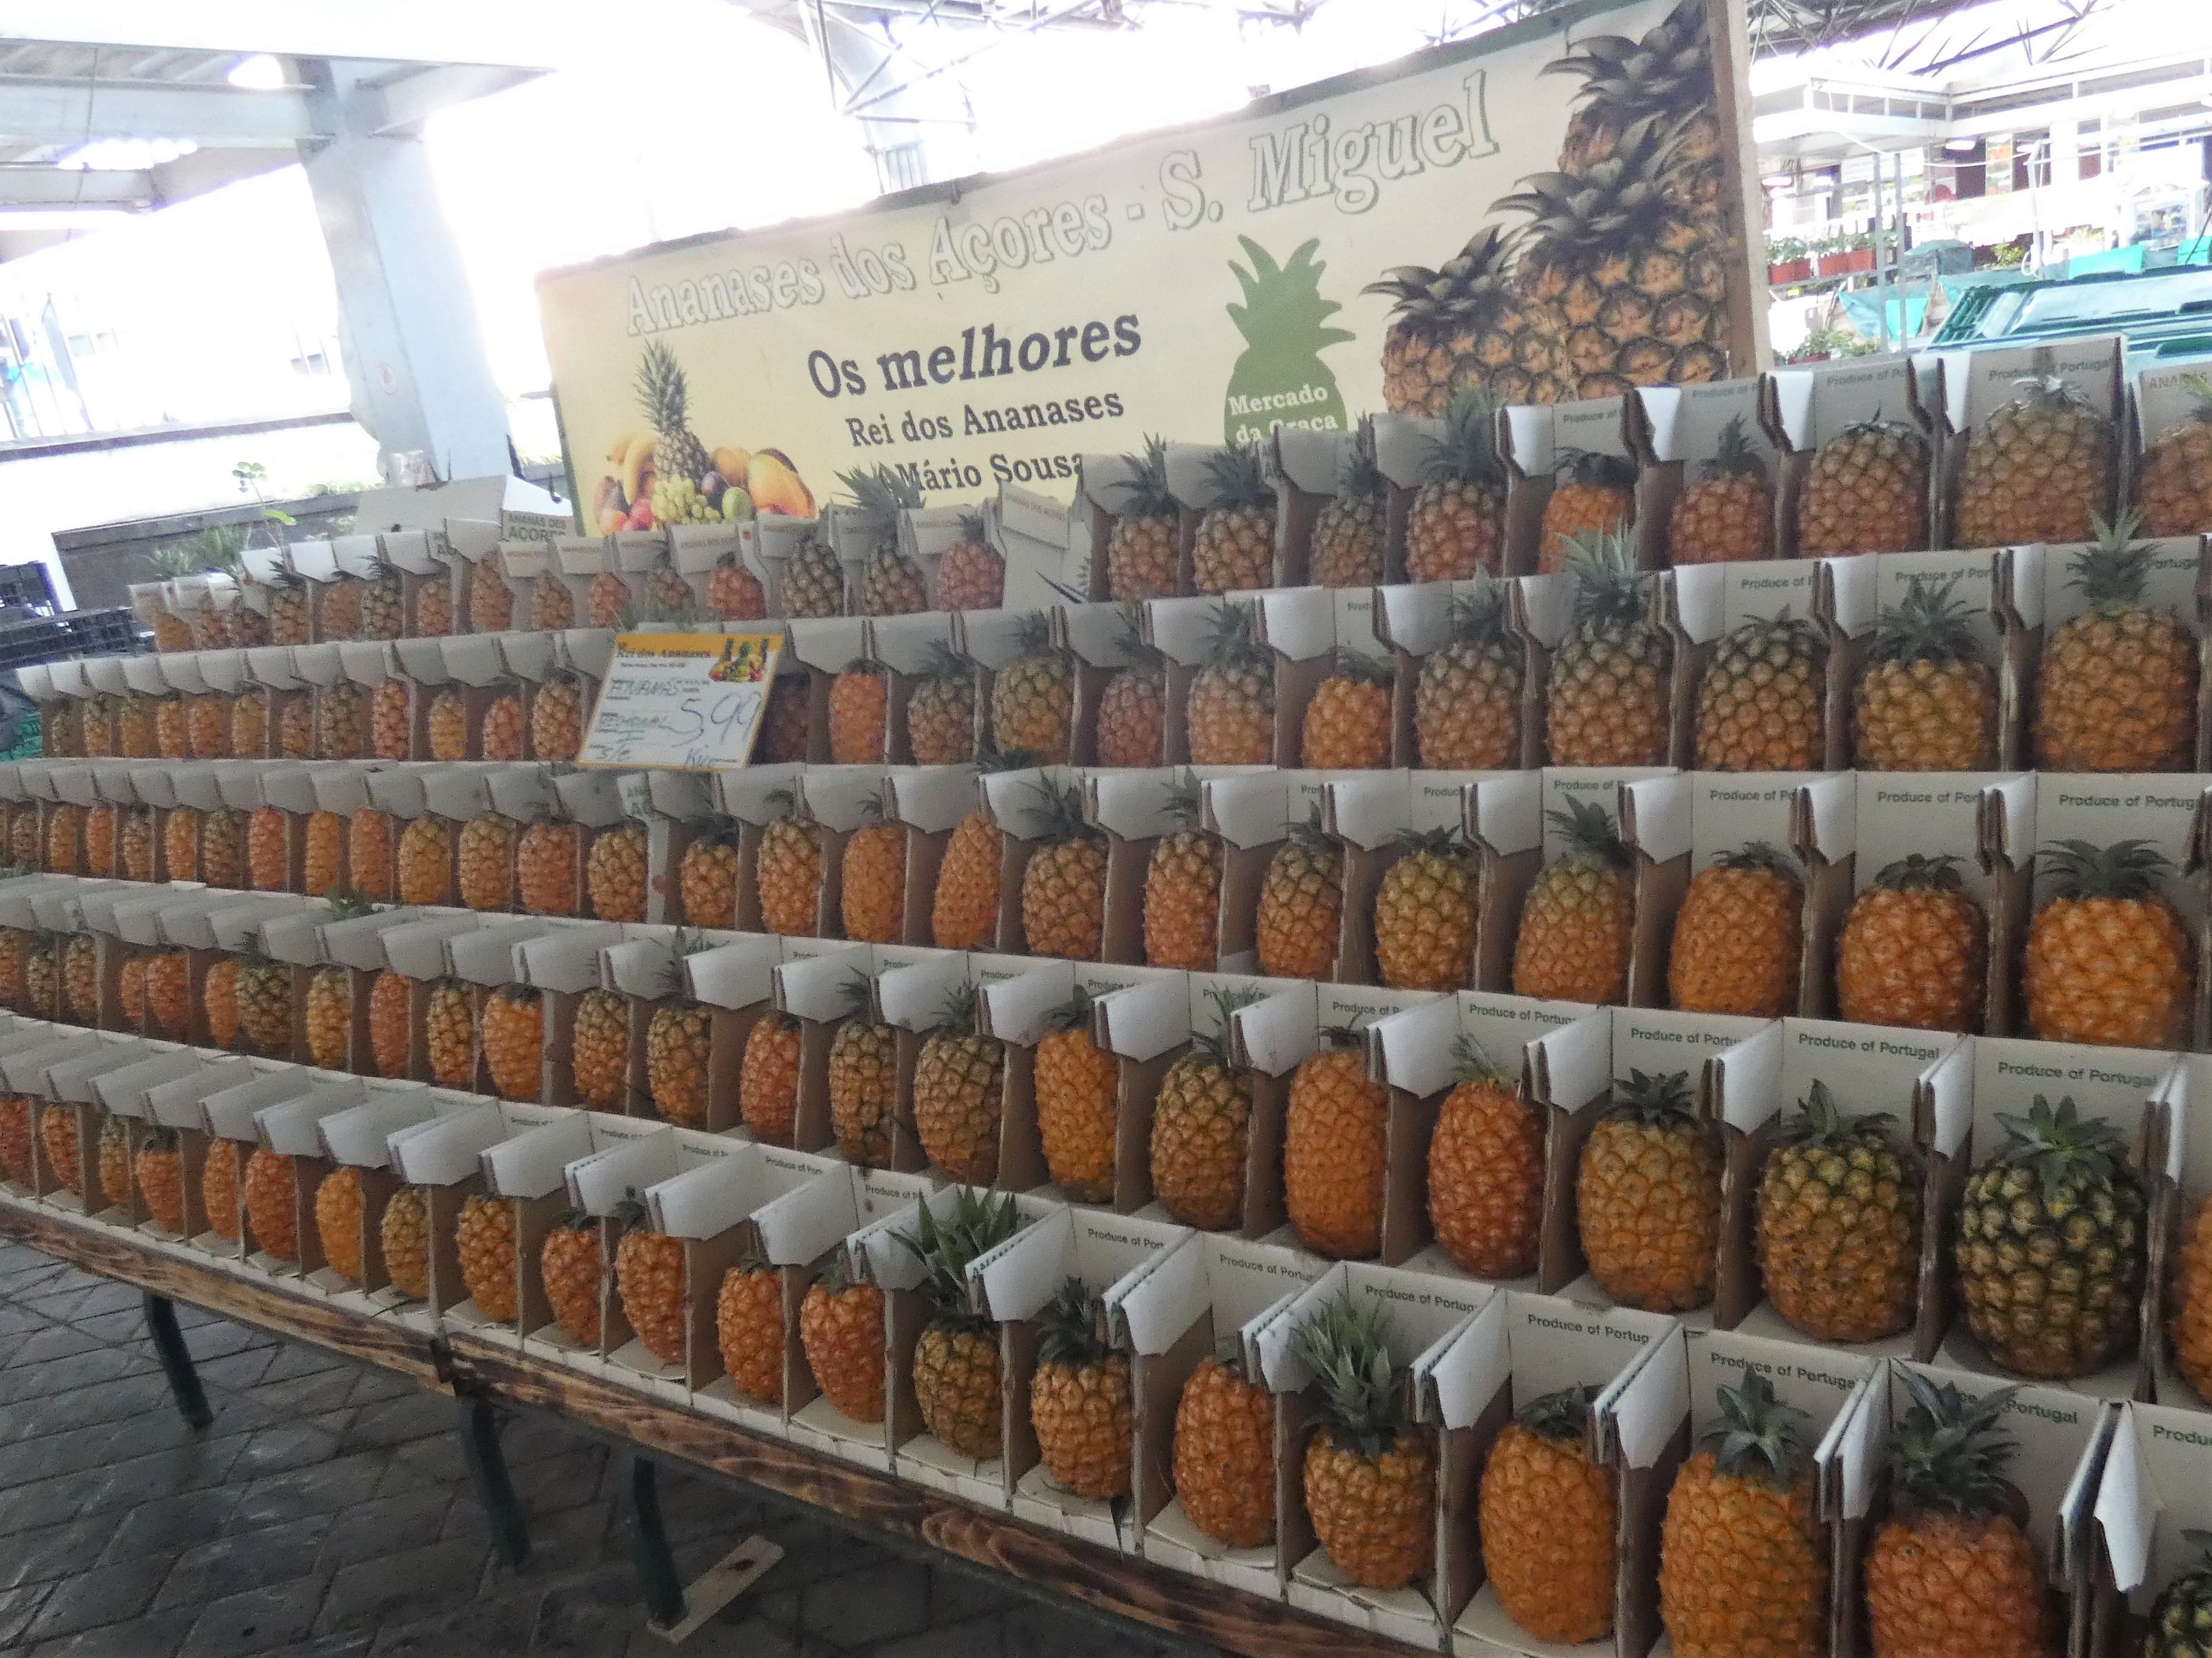 Stand d'ananas au marché